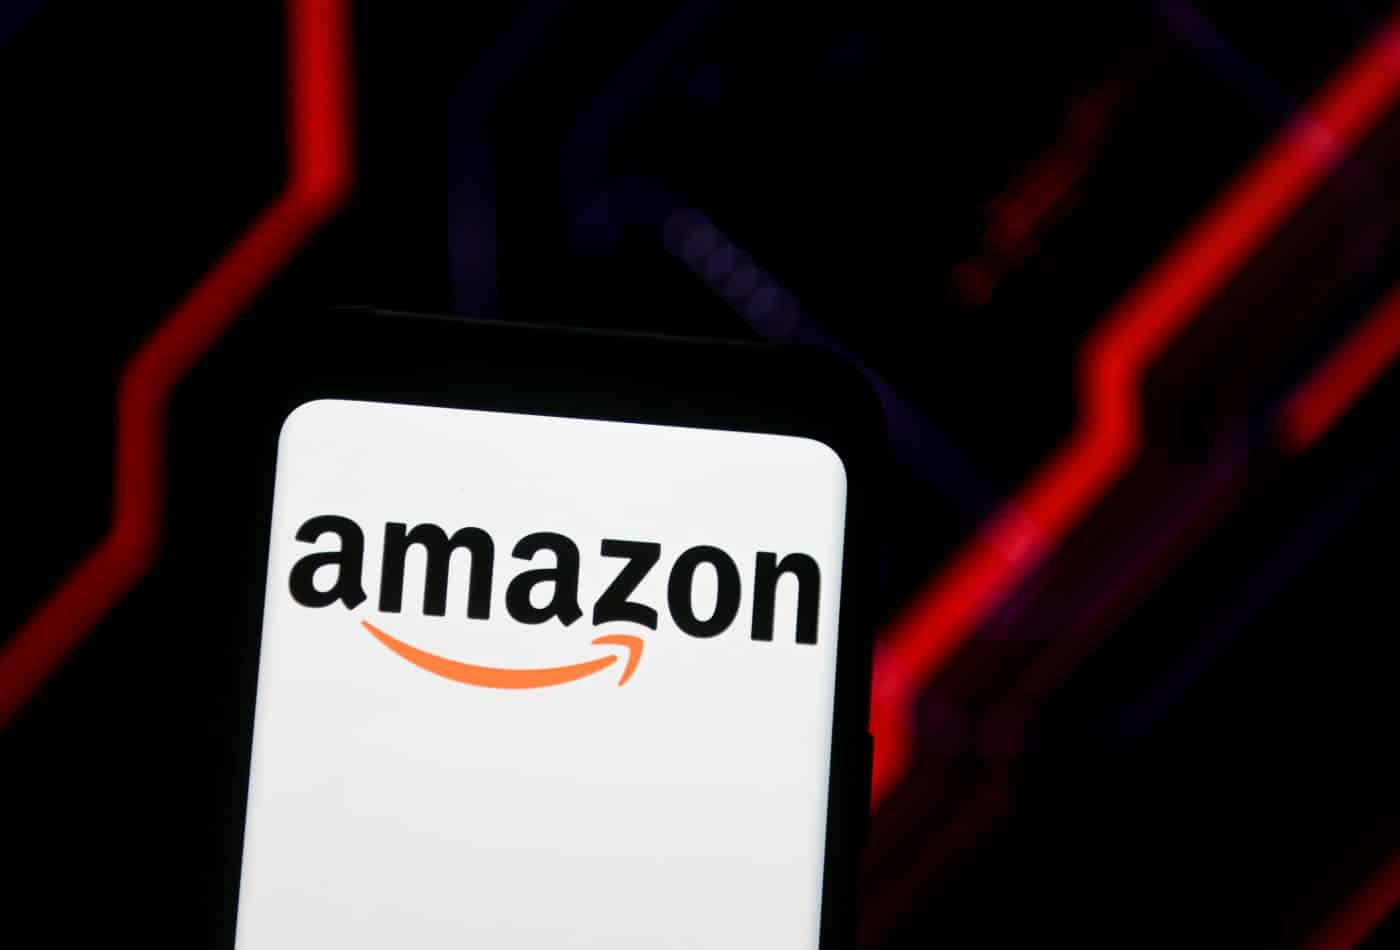 Amazon's Brand Value is Over $ 400 Billion!